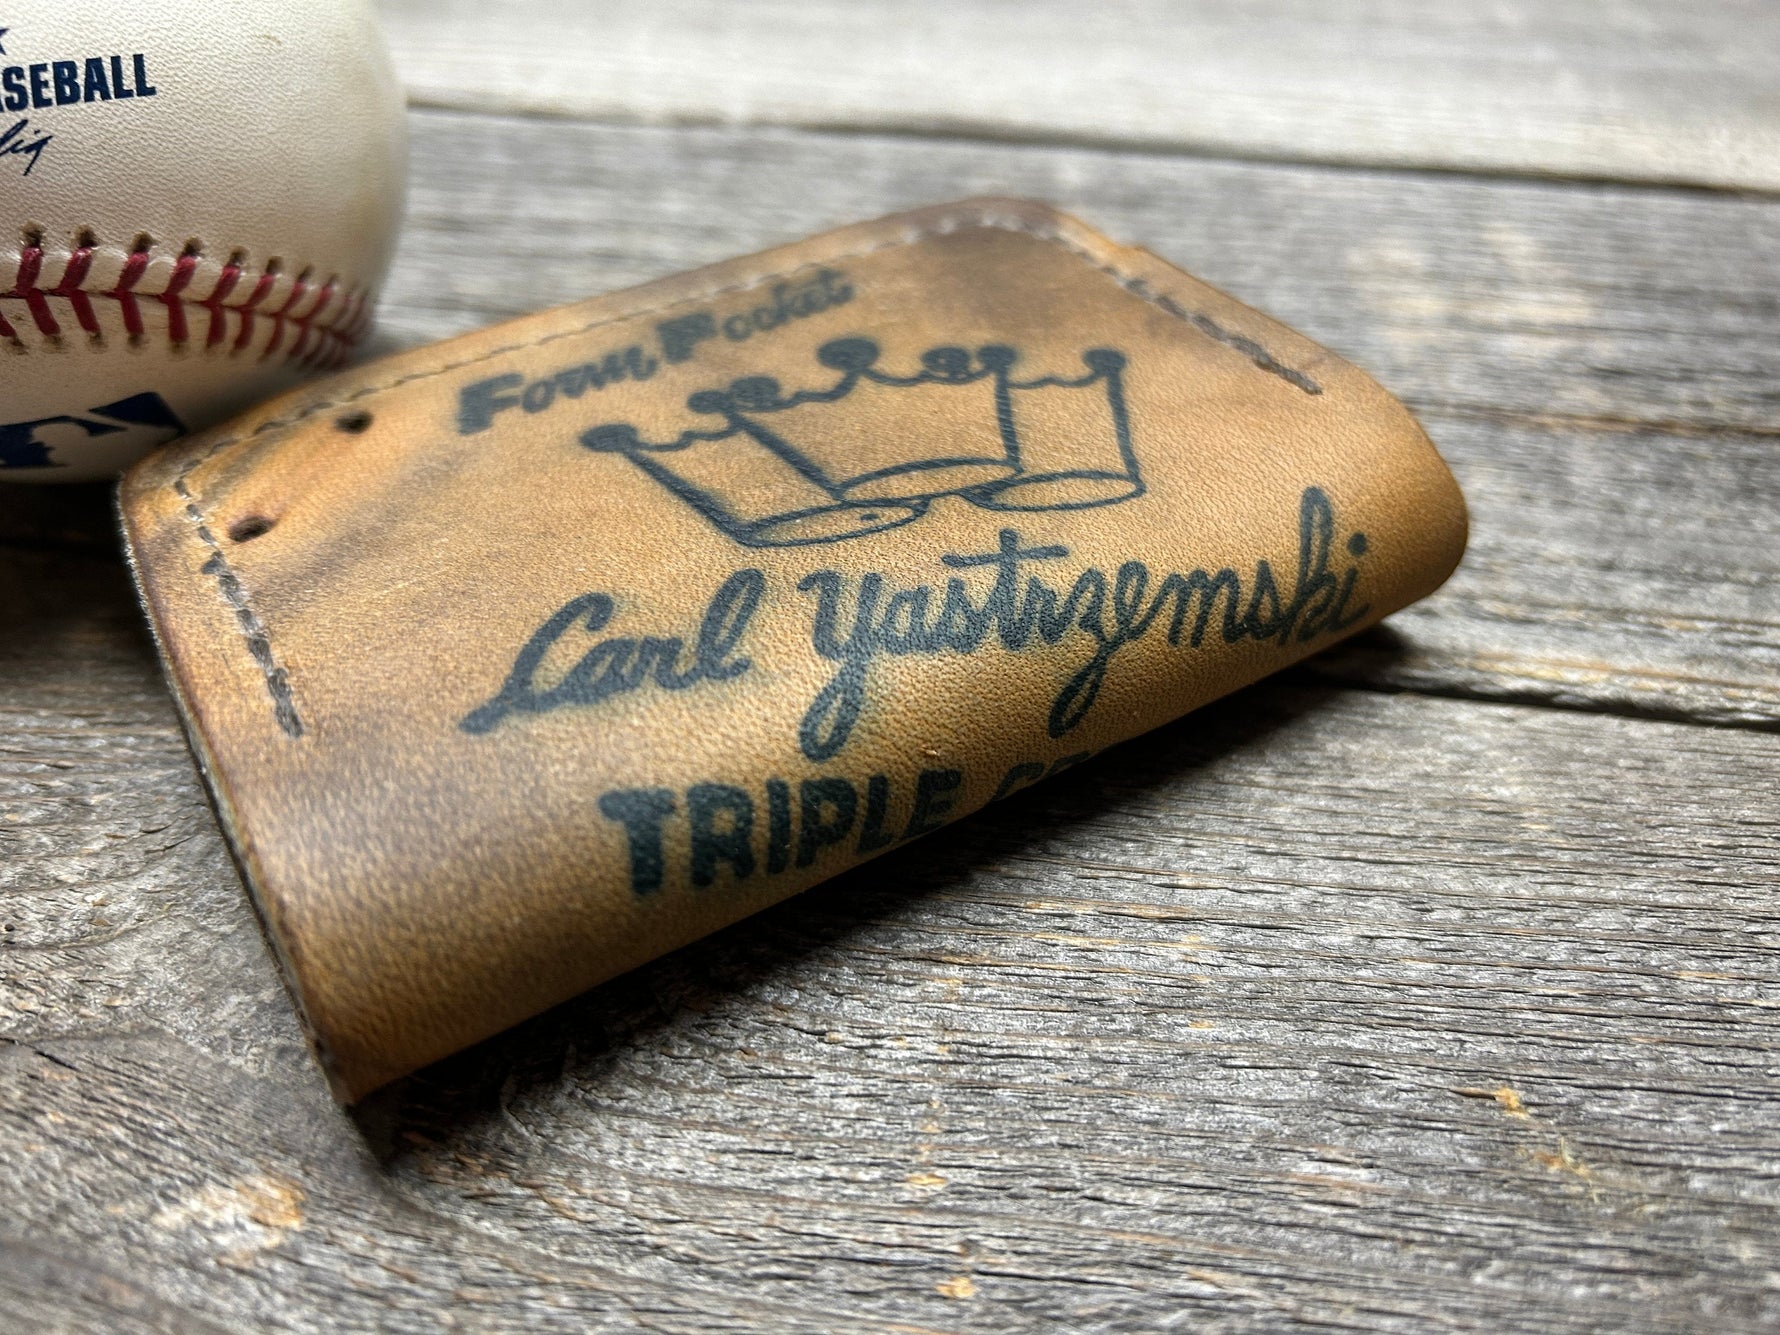 Vintage Spalding Carl Yastrzemski Baseball Glove Wallet!